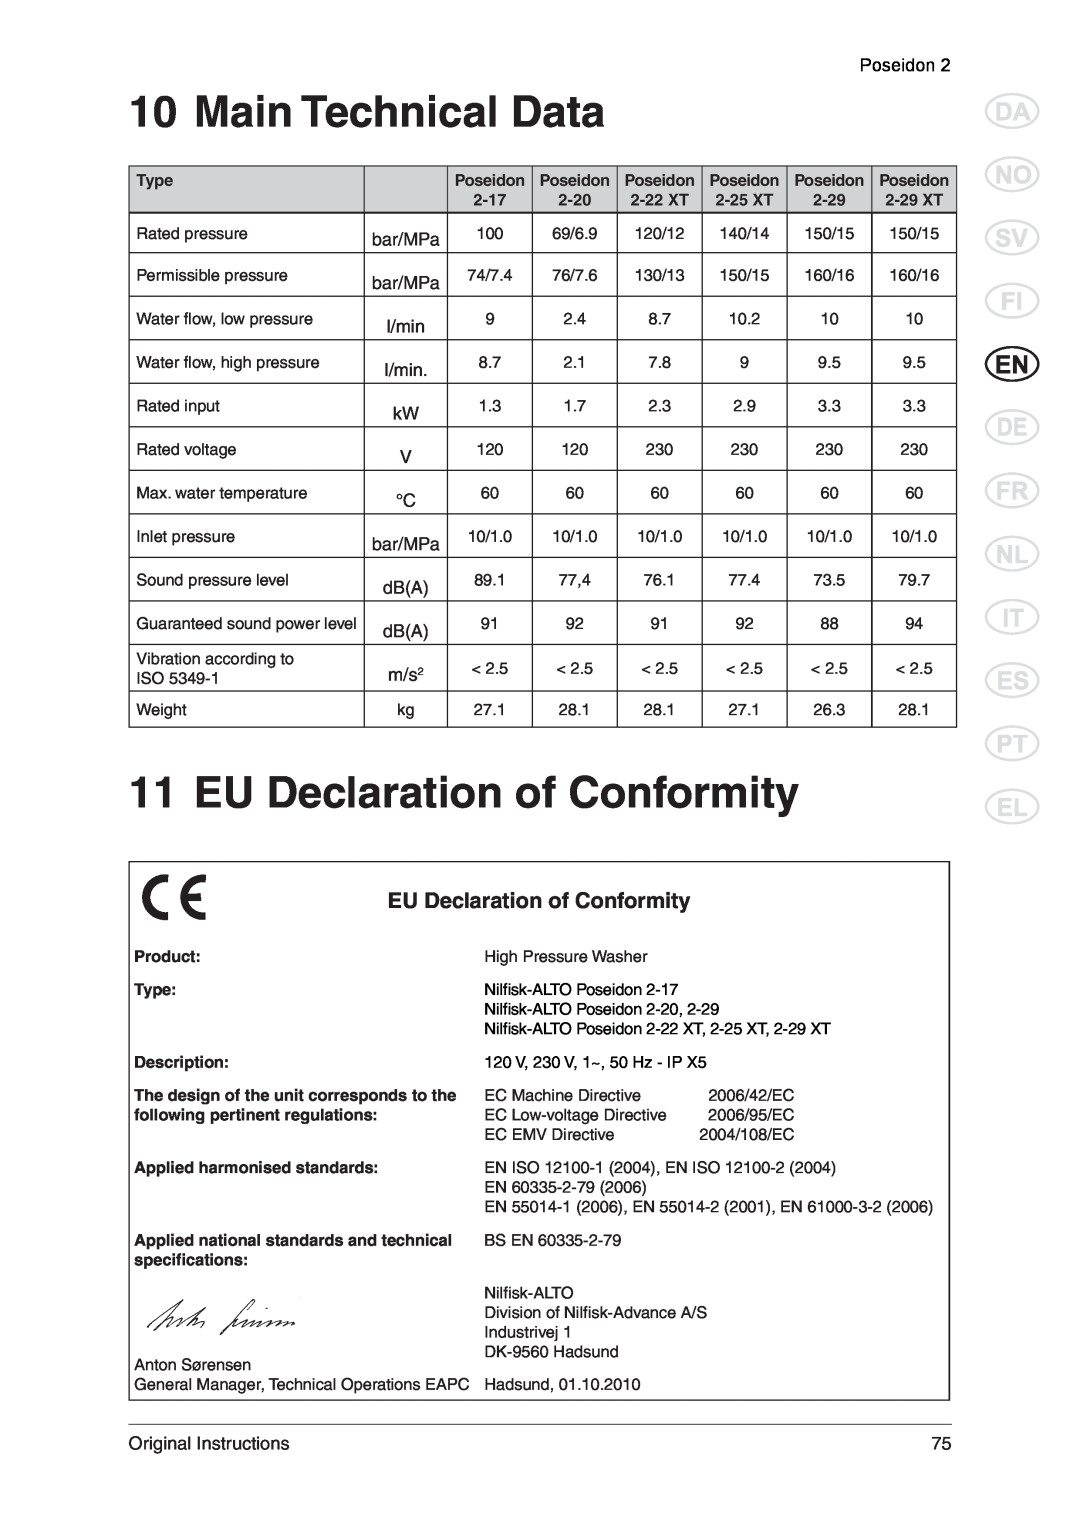 Nilfisk-ALTO 2 manual Main Technical Data, EU Declaration of Conformity, Poseidon 